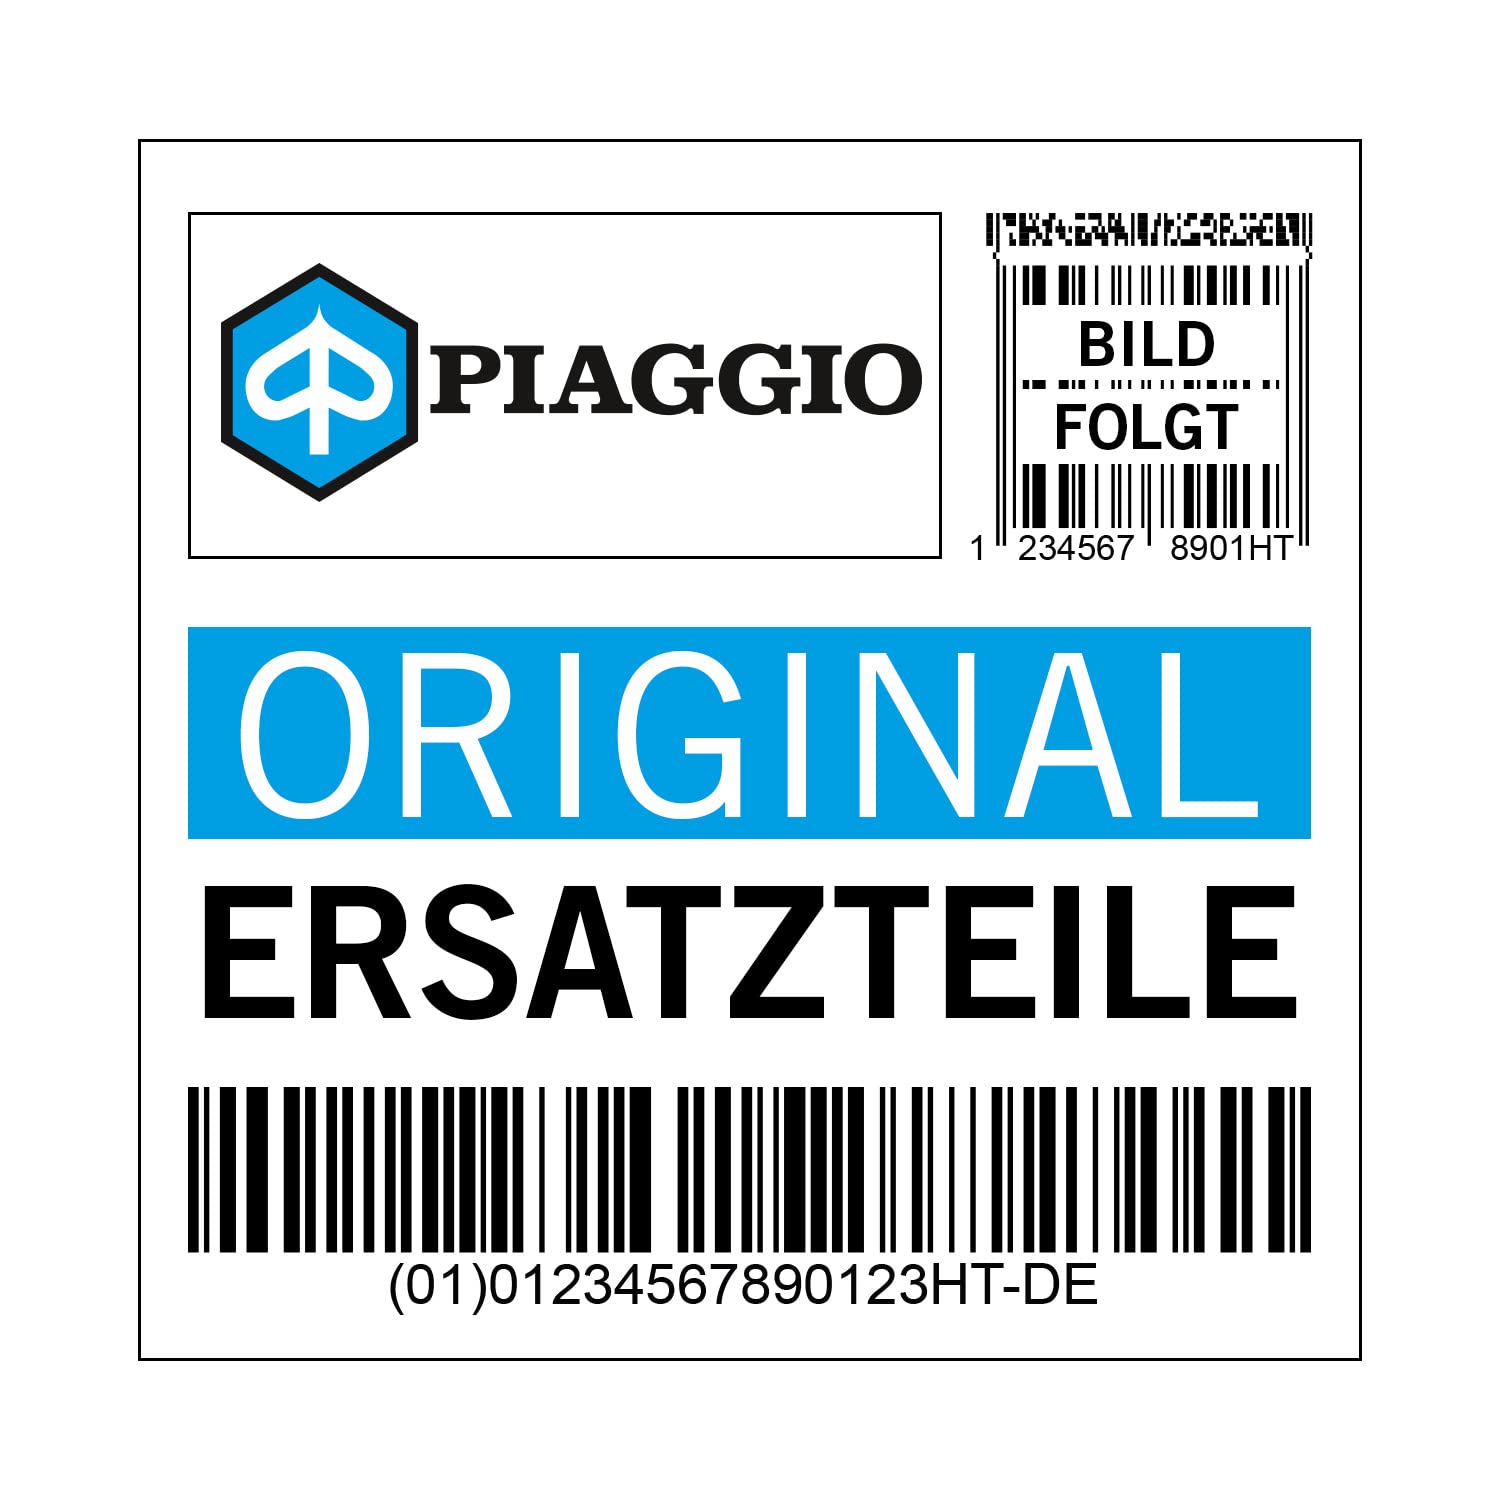 Handbremse Piaggio, 614737 von Maxtuned